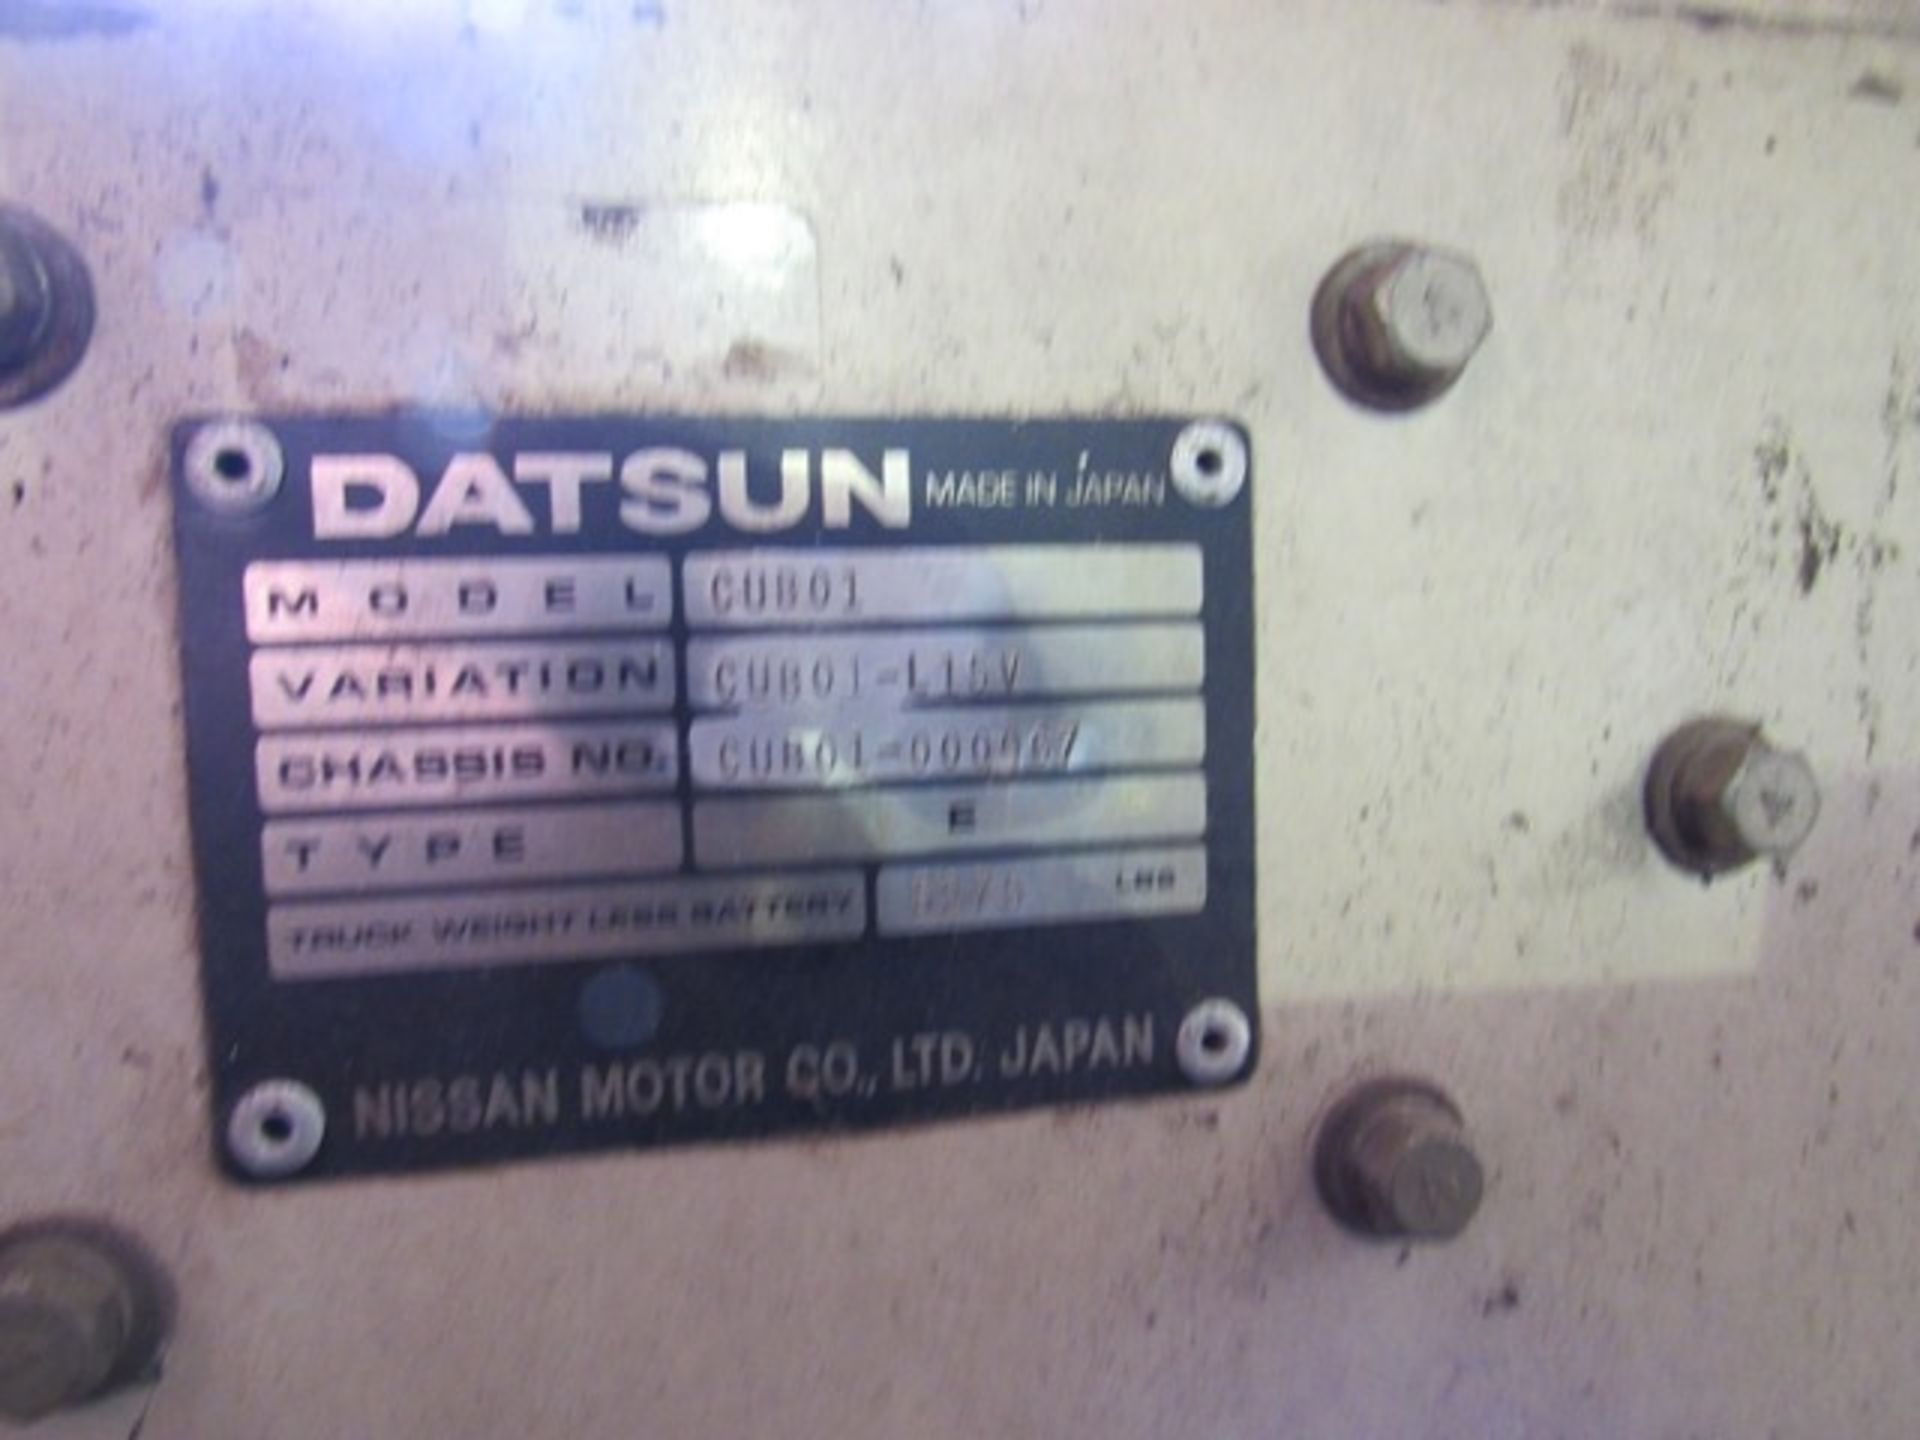 Datsun Forklift, Model #CUB01, Hours 1363, Rigging Fee: $100 - Image 7 of 7